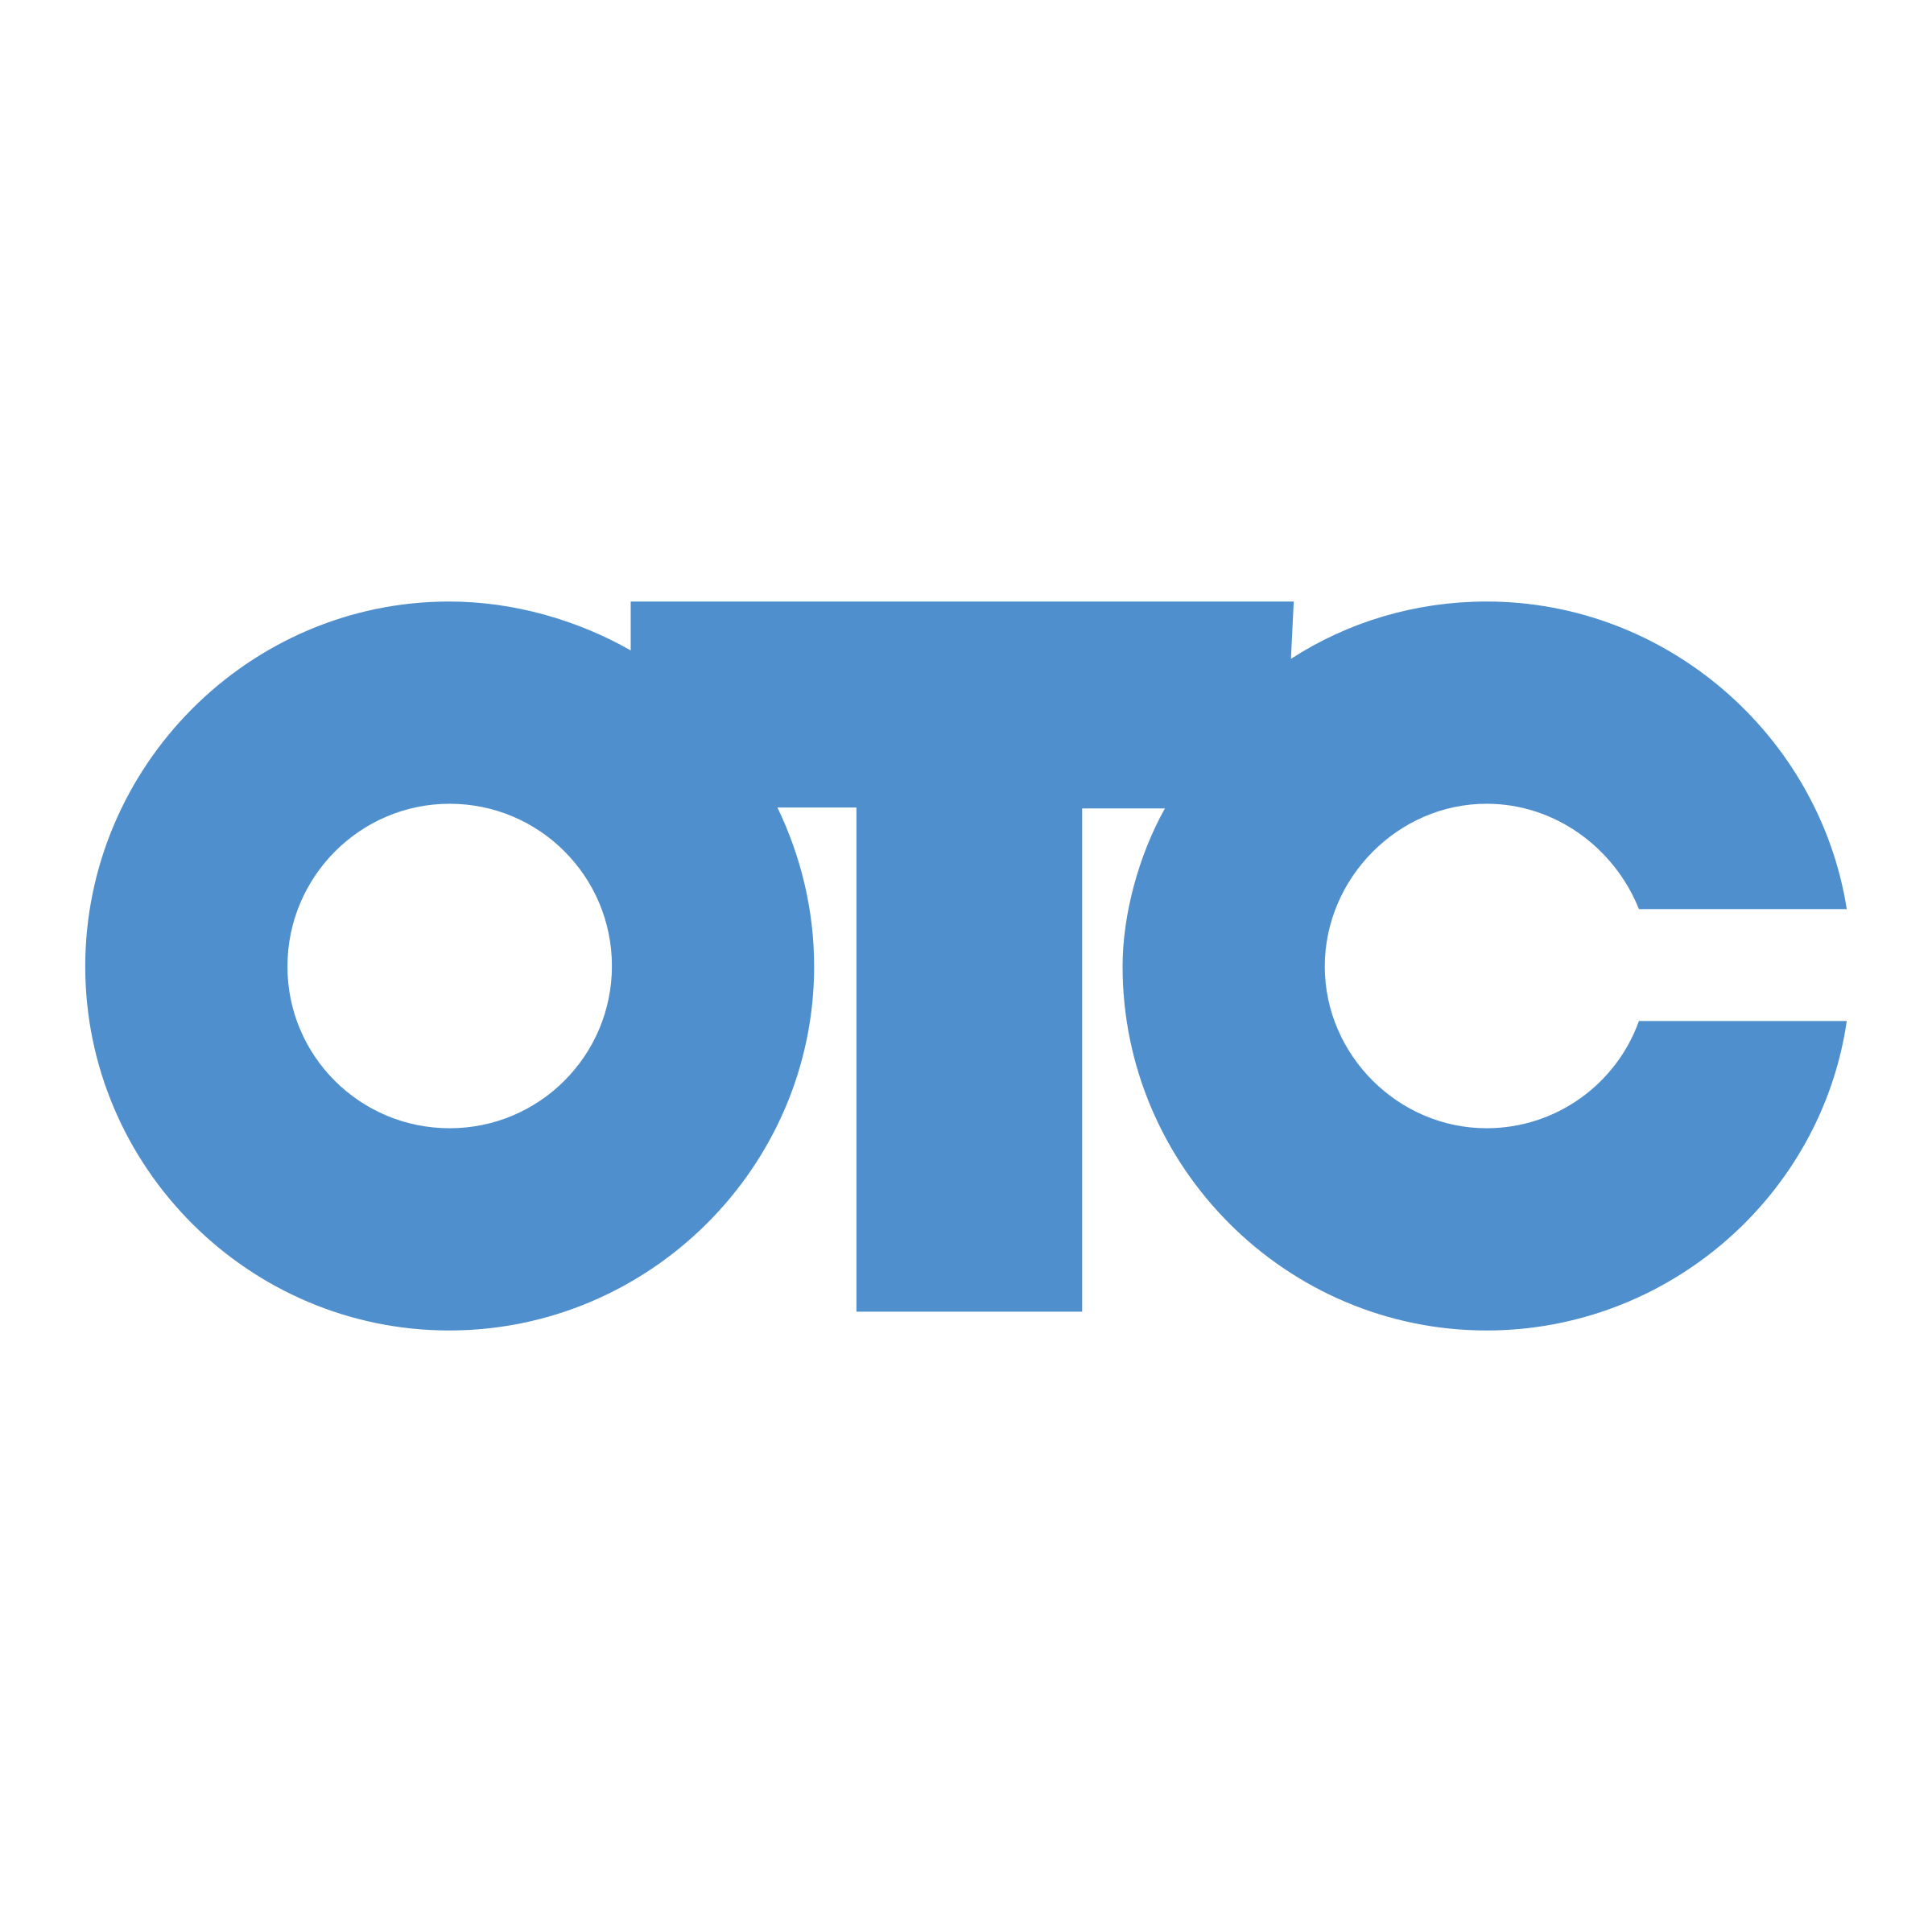 OTC Logo - OTC Logo PNG Transparent & SVG Vector